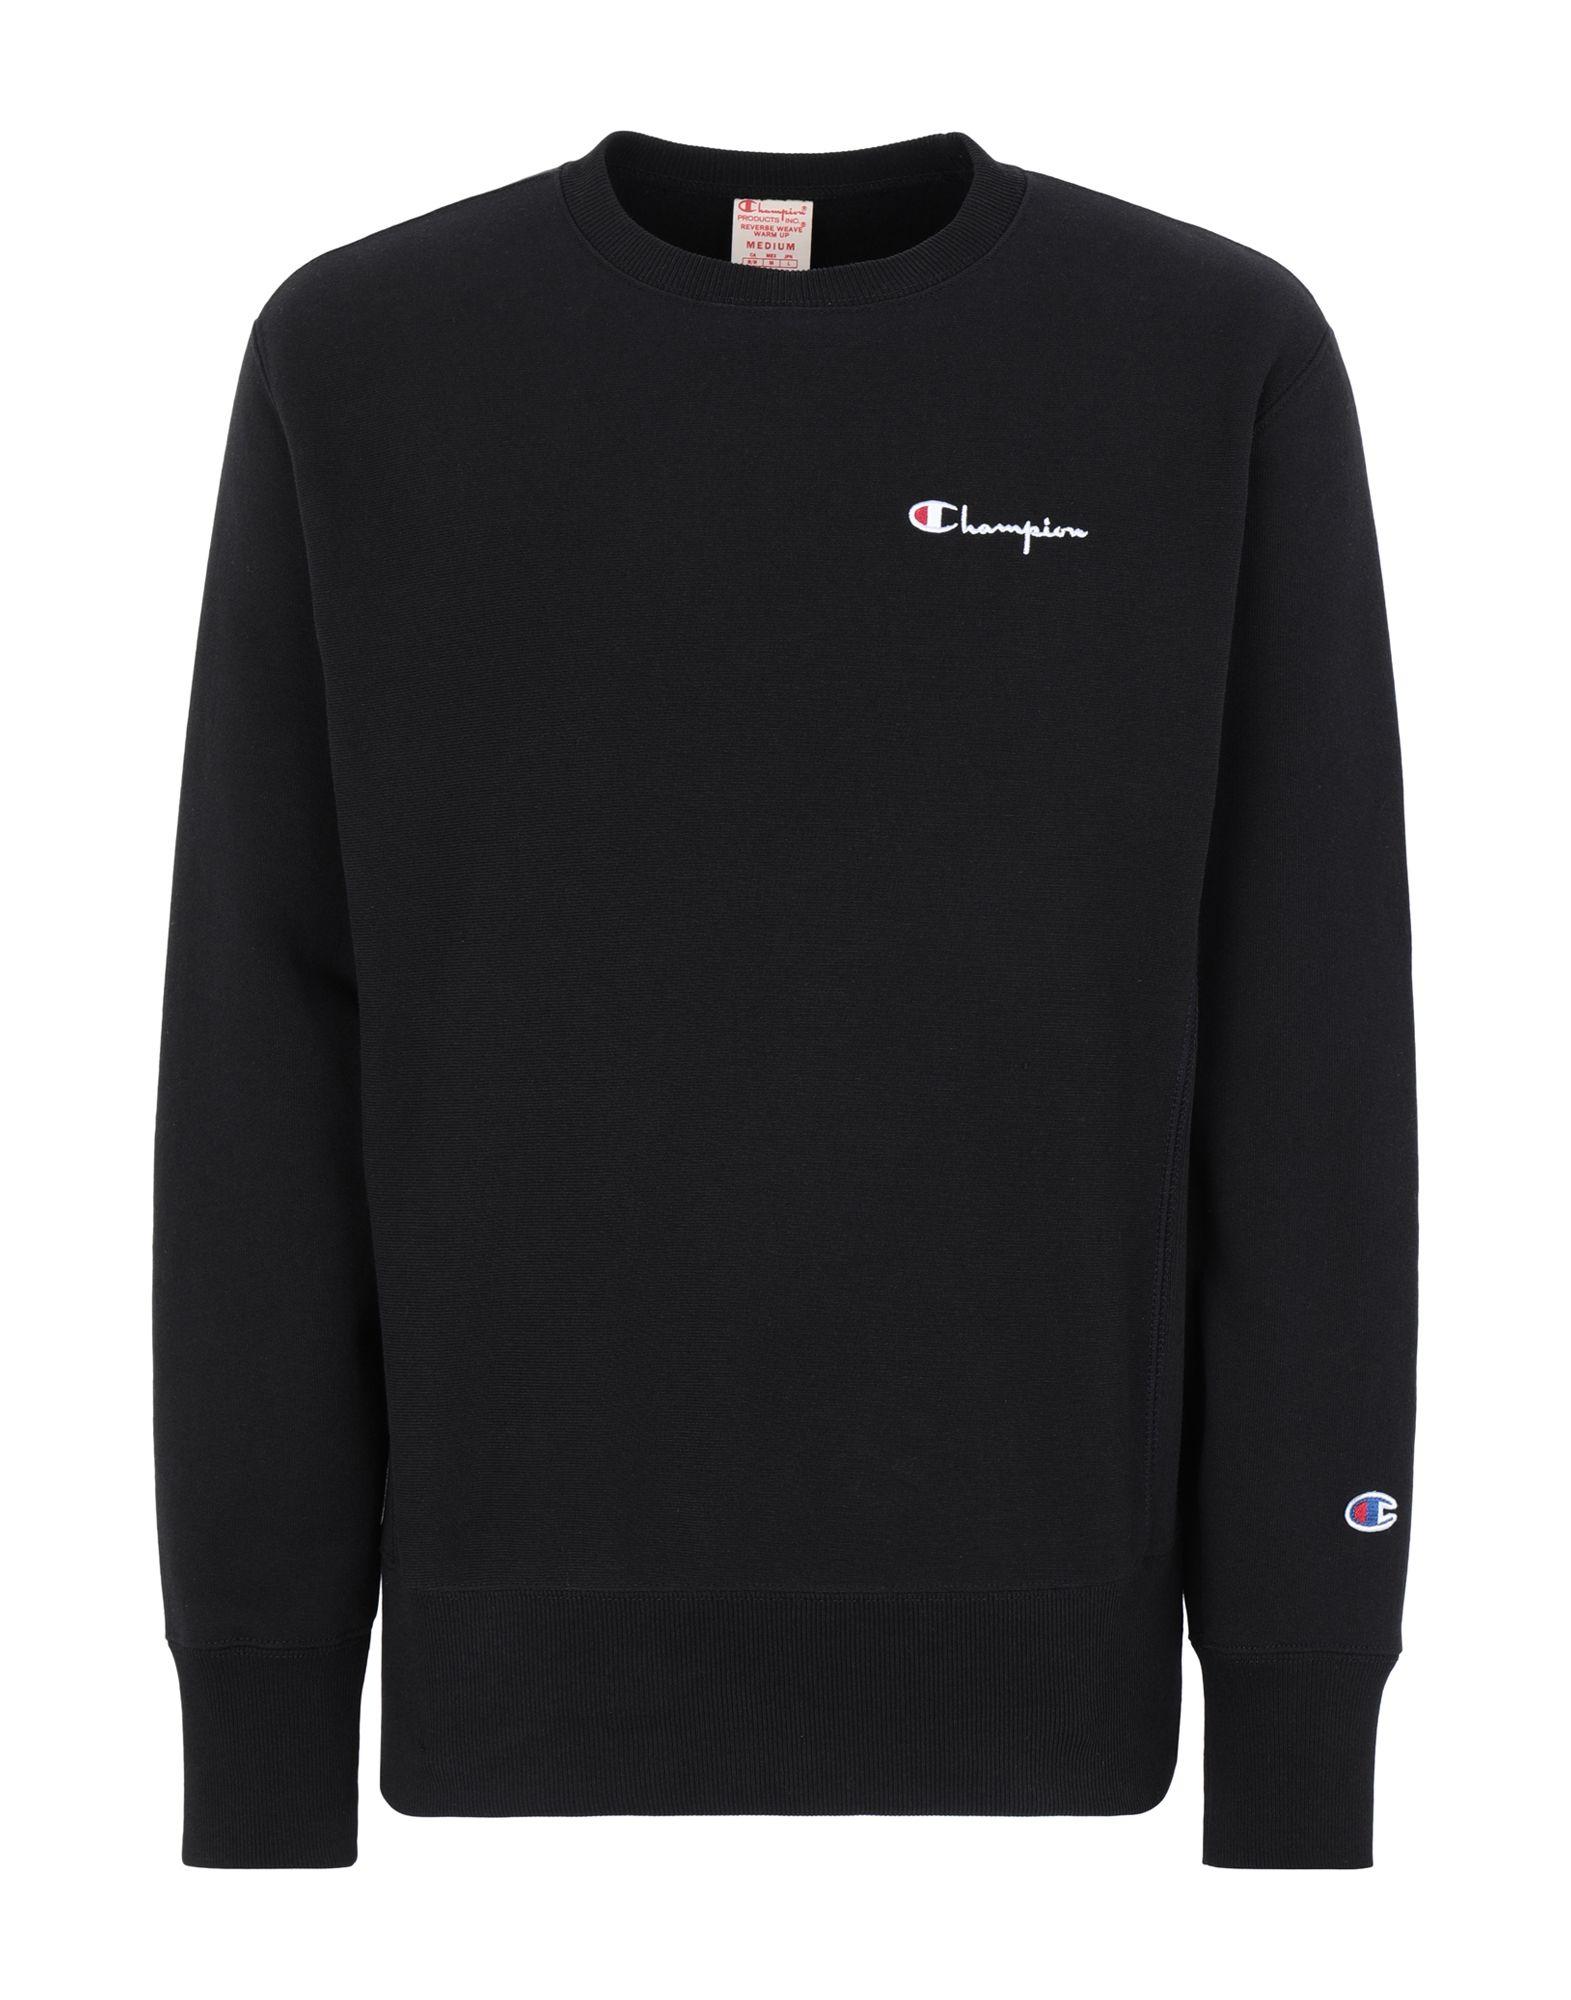 Champion Fleece Sweatshirt in Black for Men - Lyst